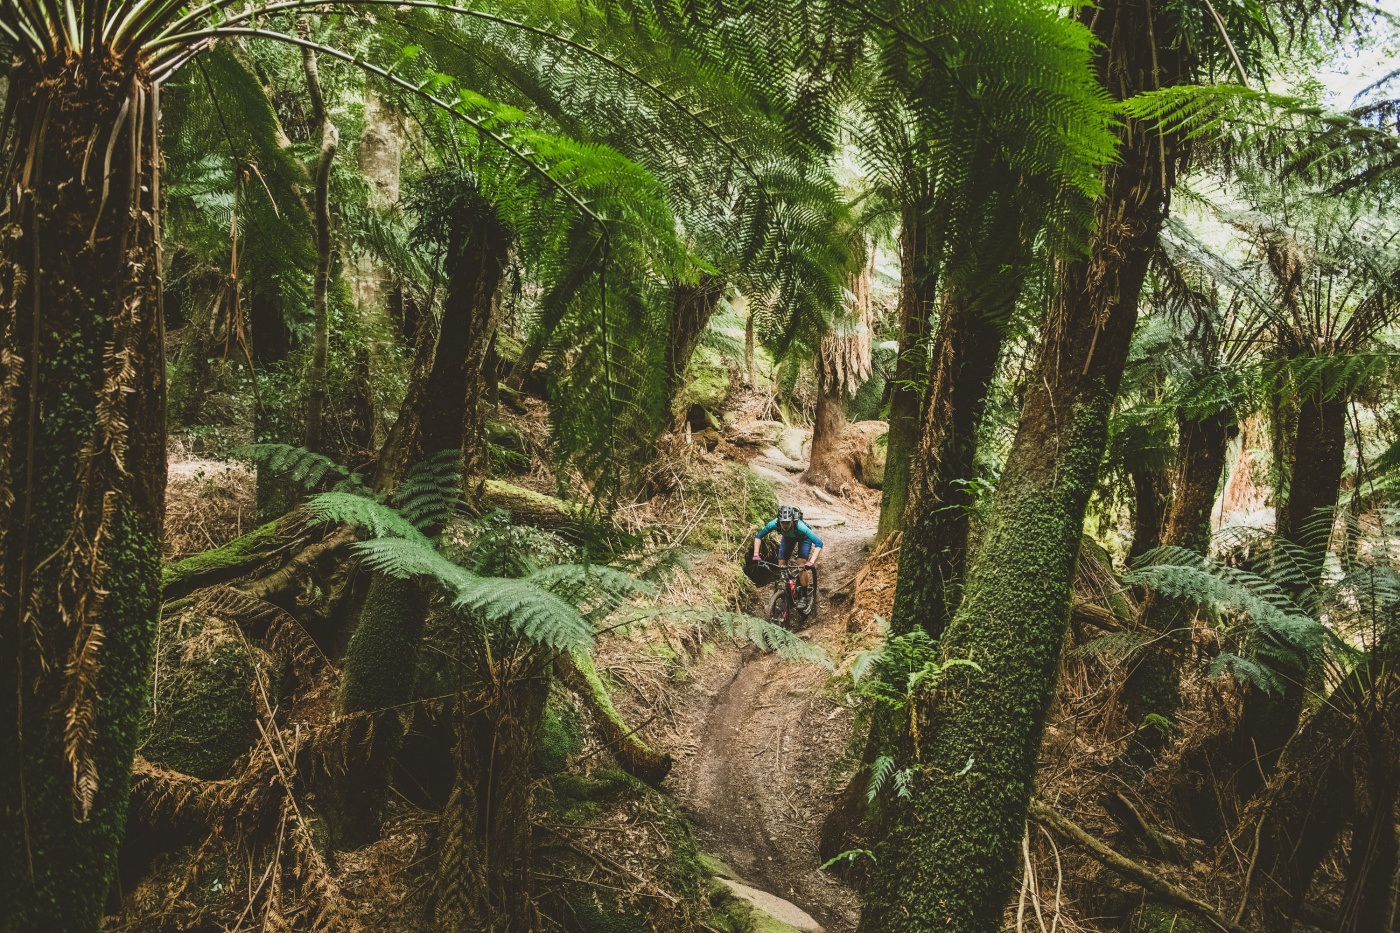 Riding through the deep Atlast trail rainforest.